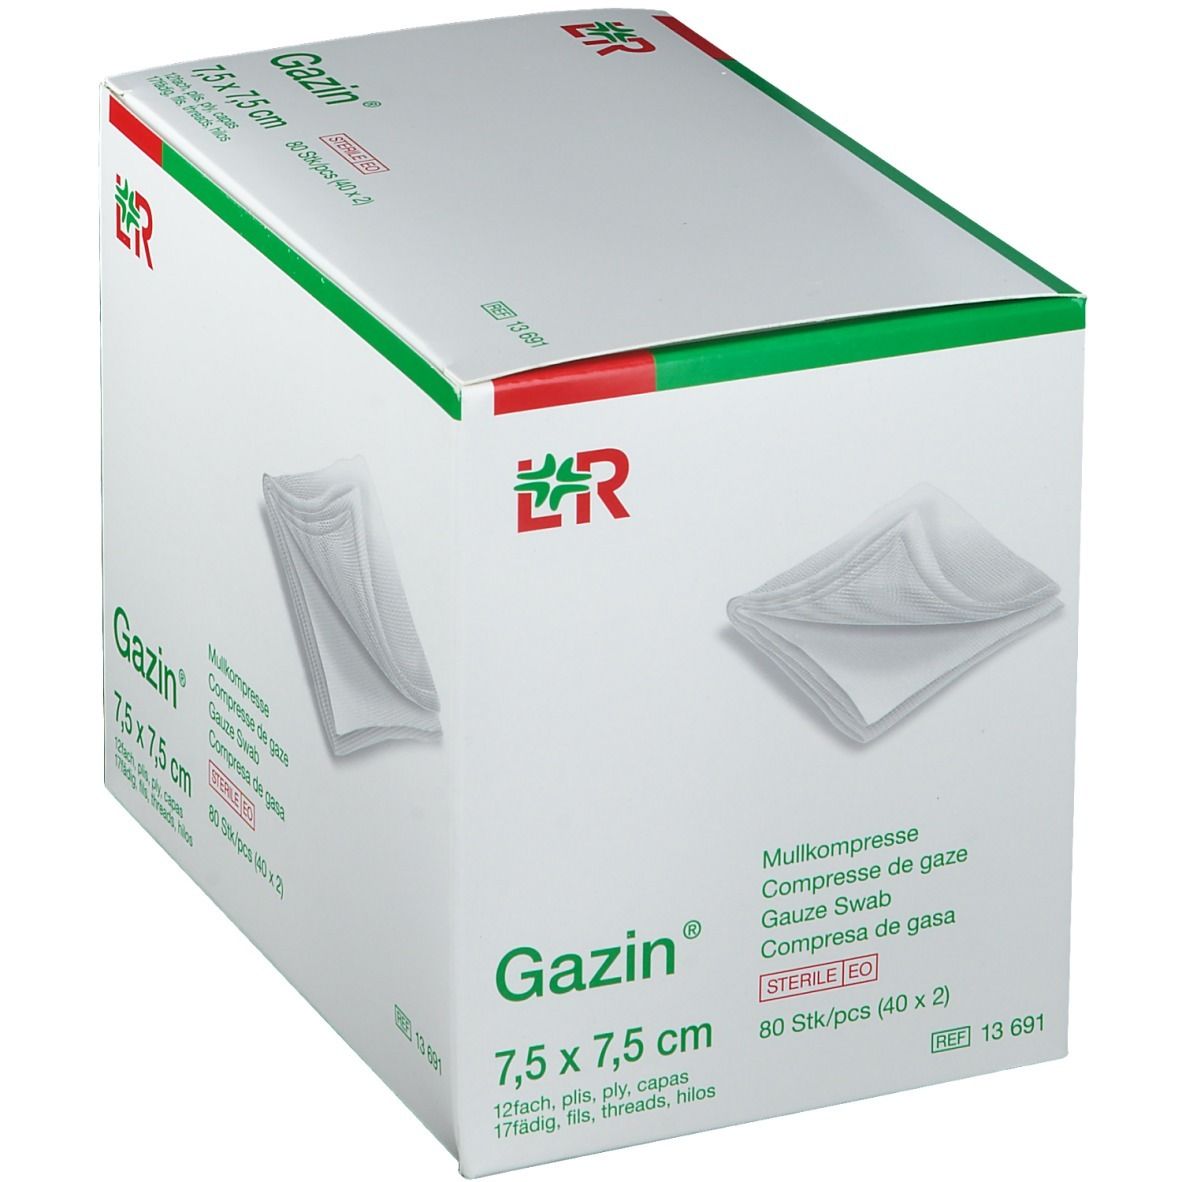 Gazin® Kompresse 7,5 cm x 7,5 cm steril 12 lagig